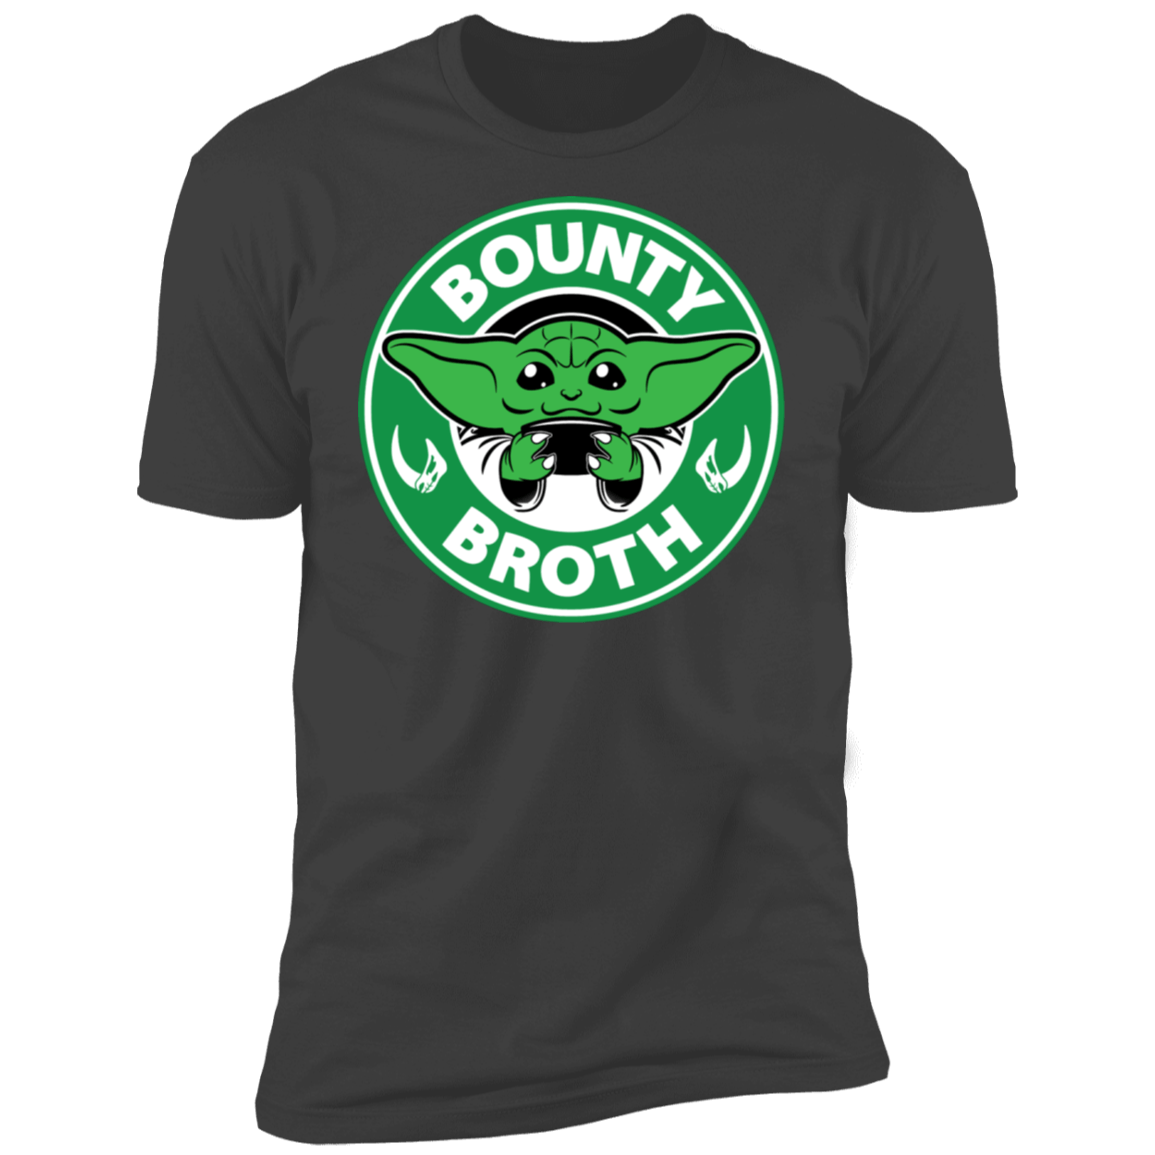 T-Shirts Heavy Metal / S Bounty Broth Men's Premium T-Shirt